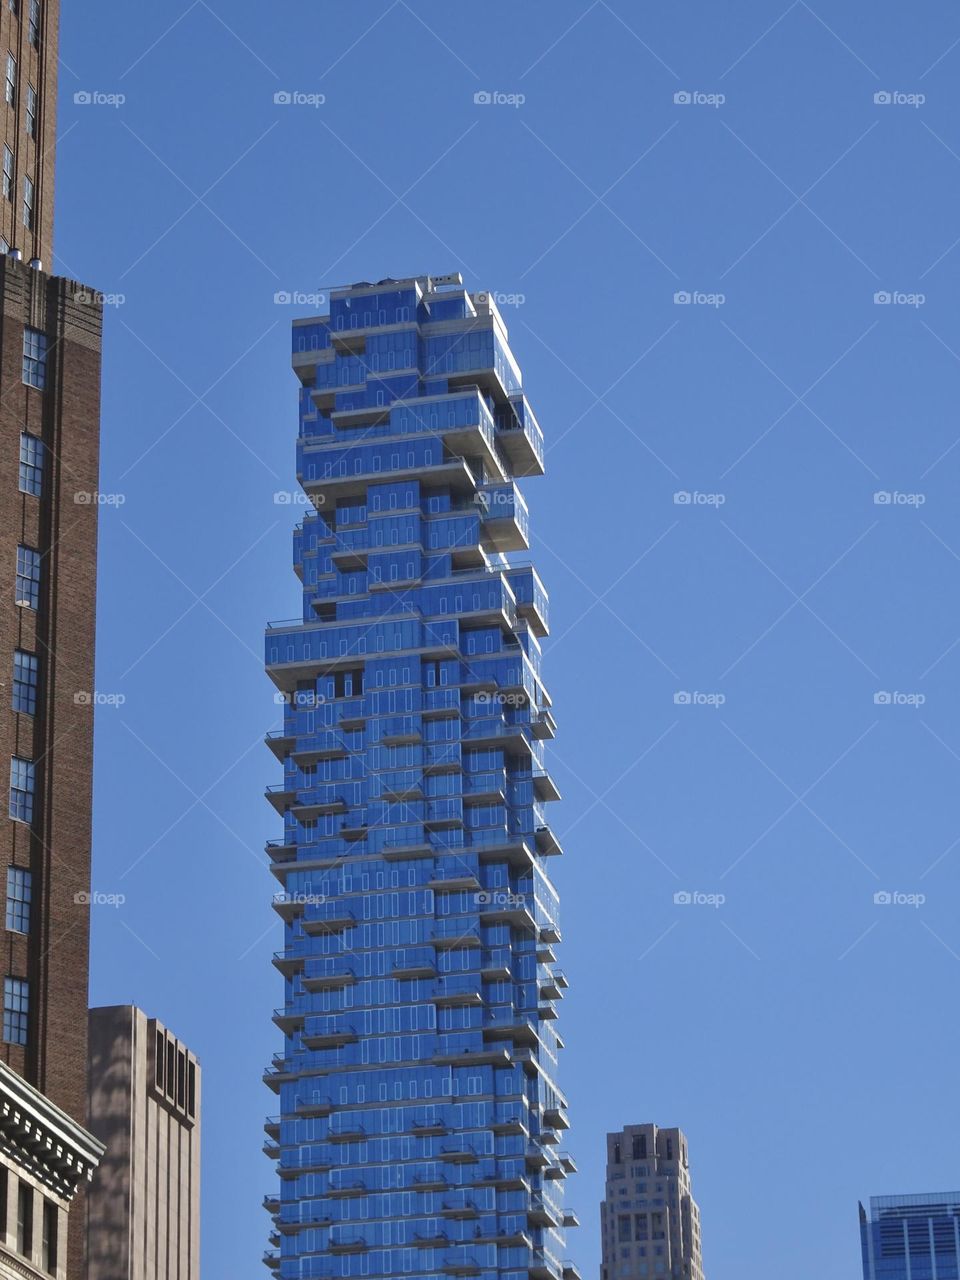 Tower block against blue sky